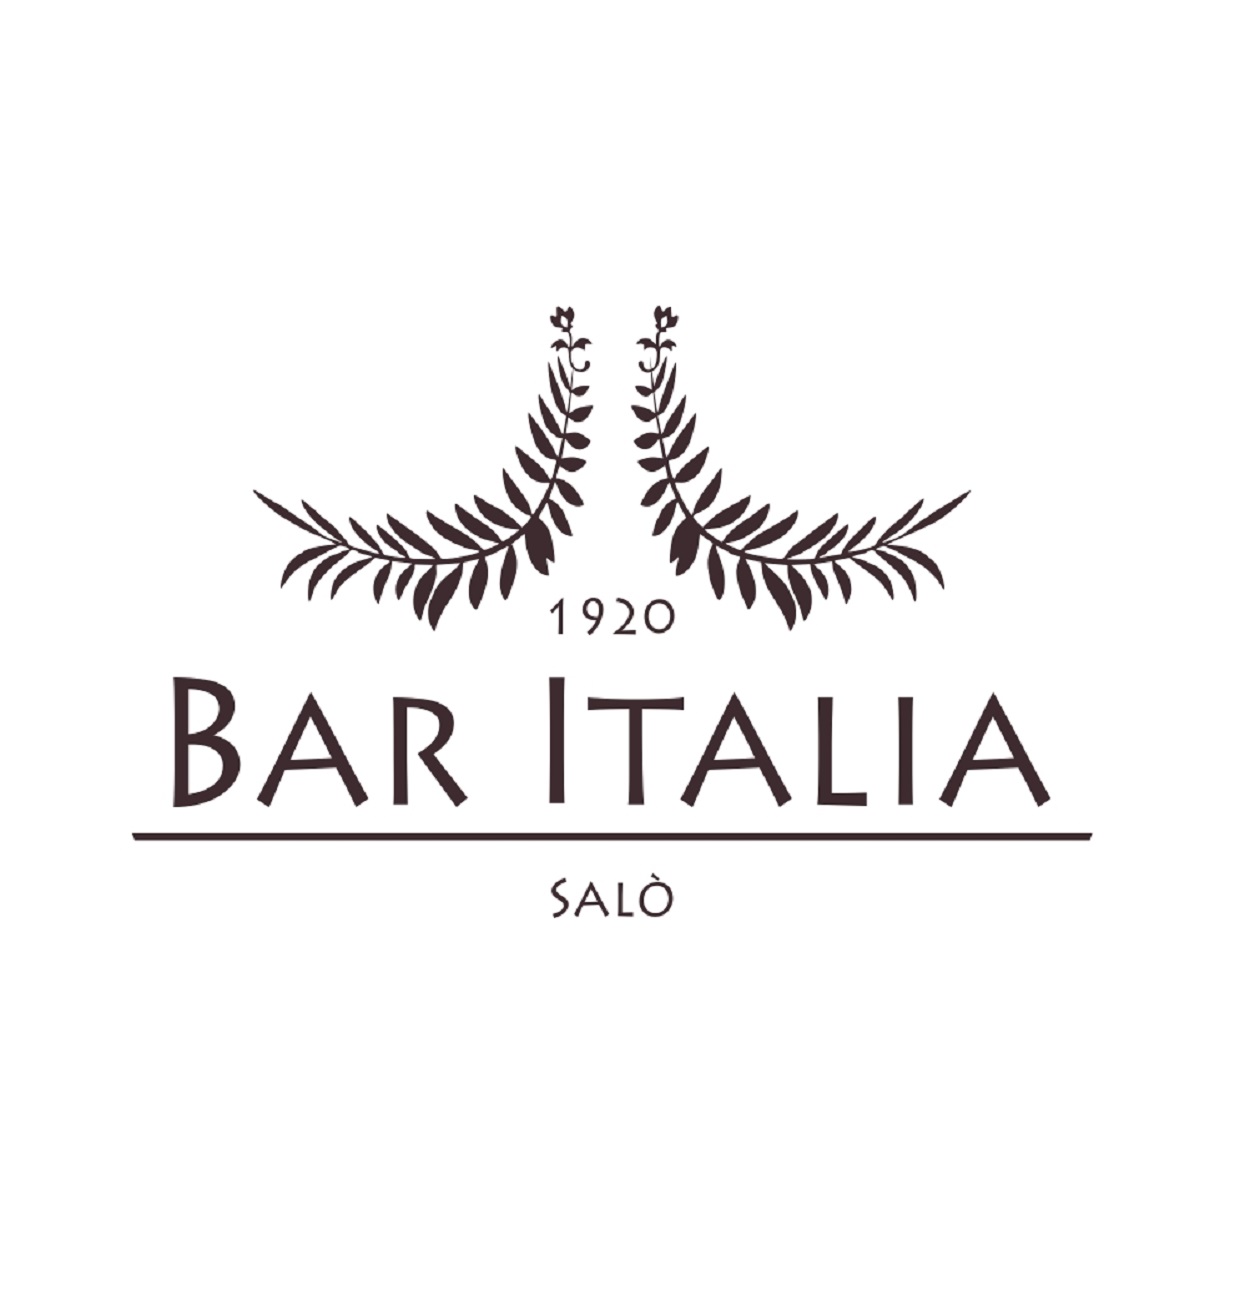 Bar Italia Salò